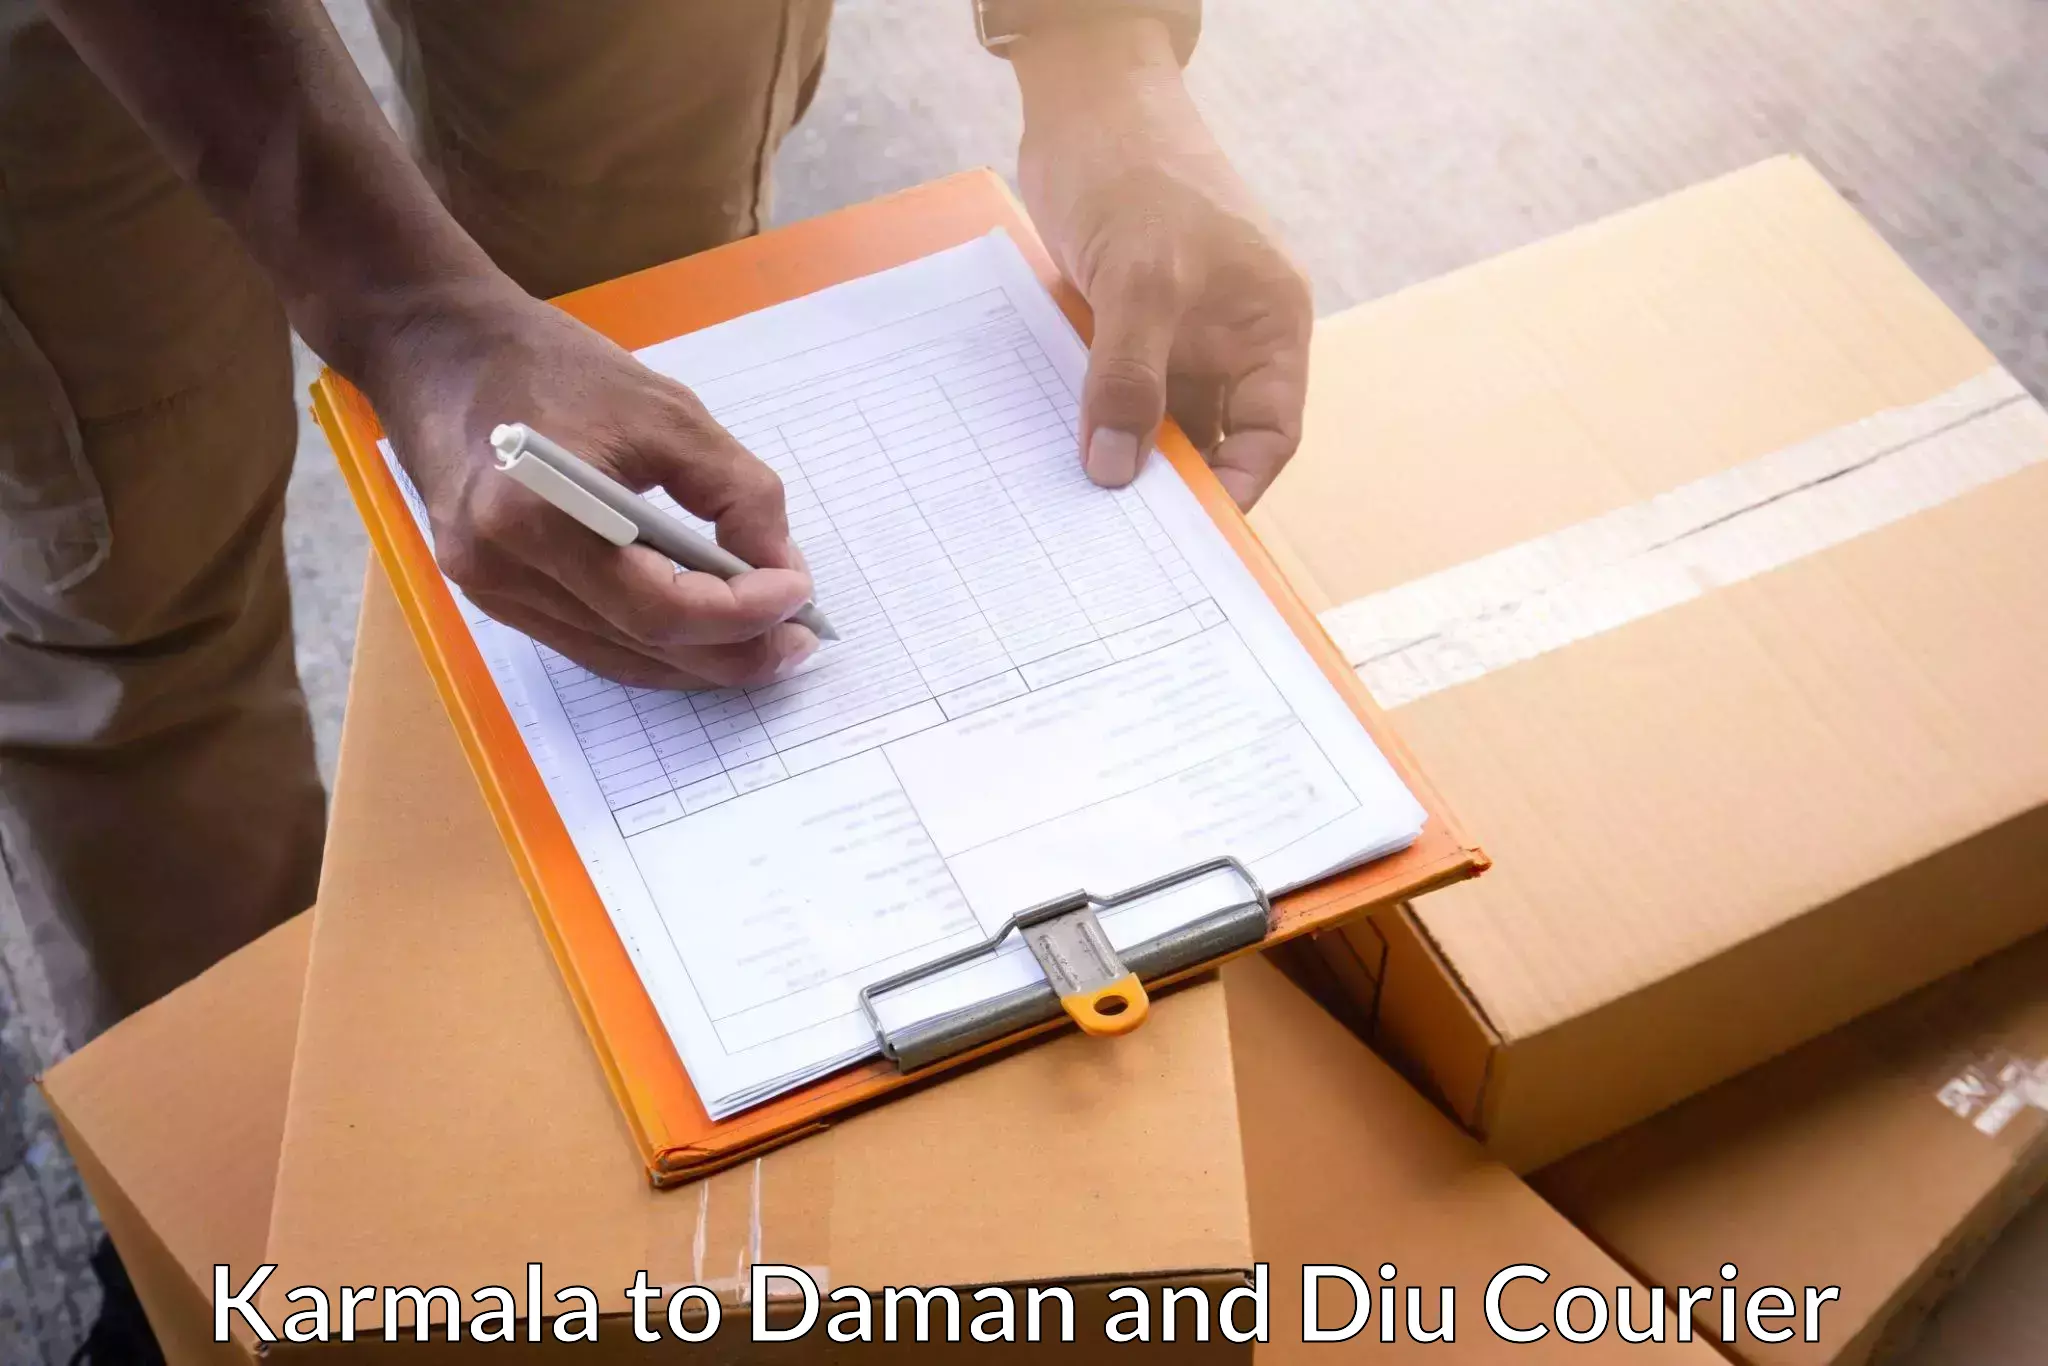 Logistics service provider Karmala to Daman